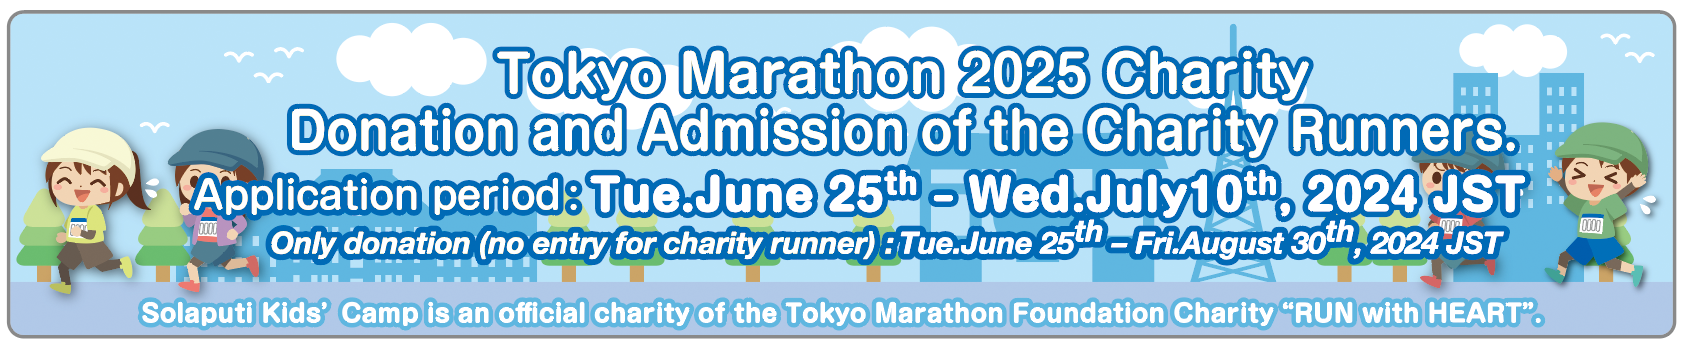 Tokyo Marathon 2025 Charity